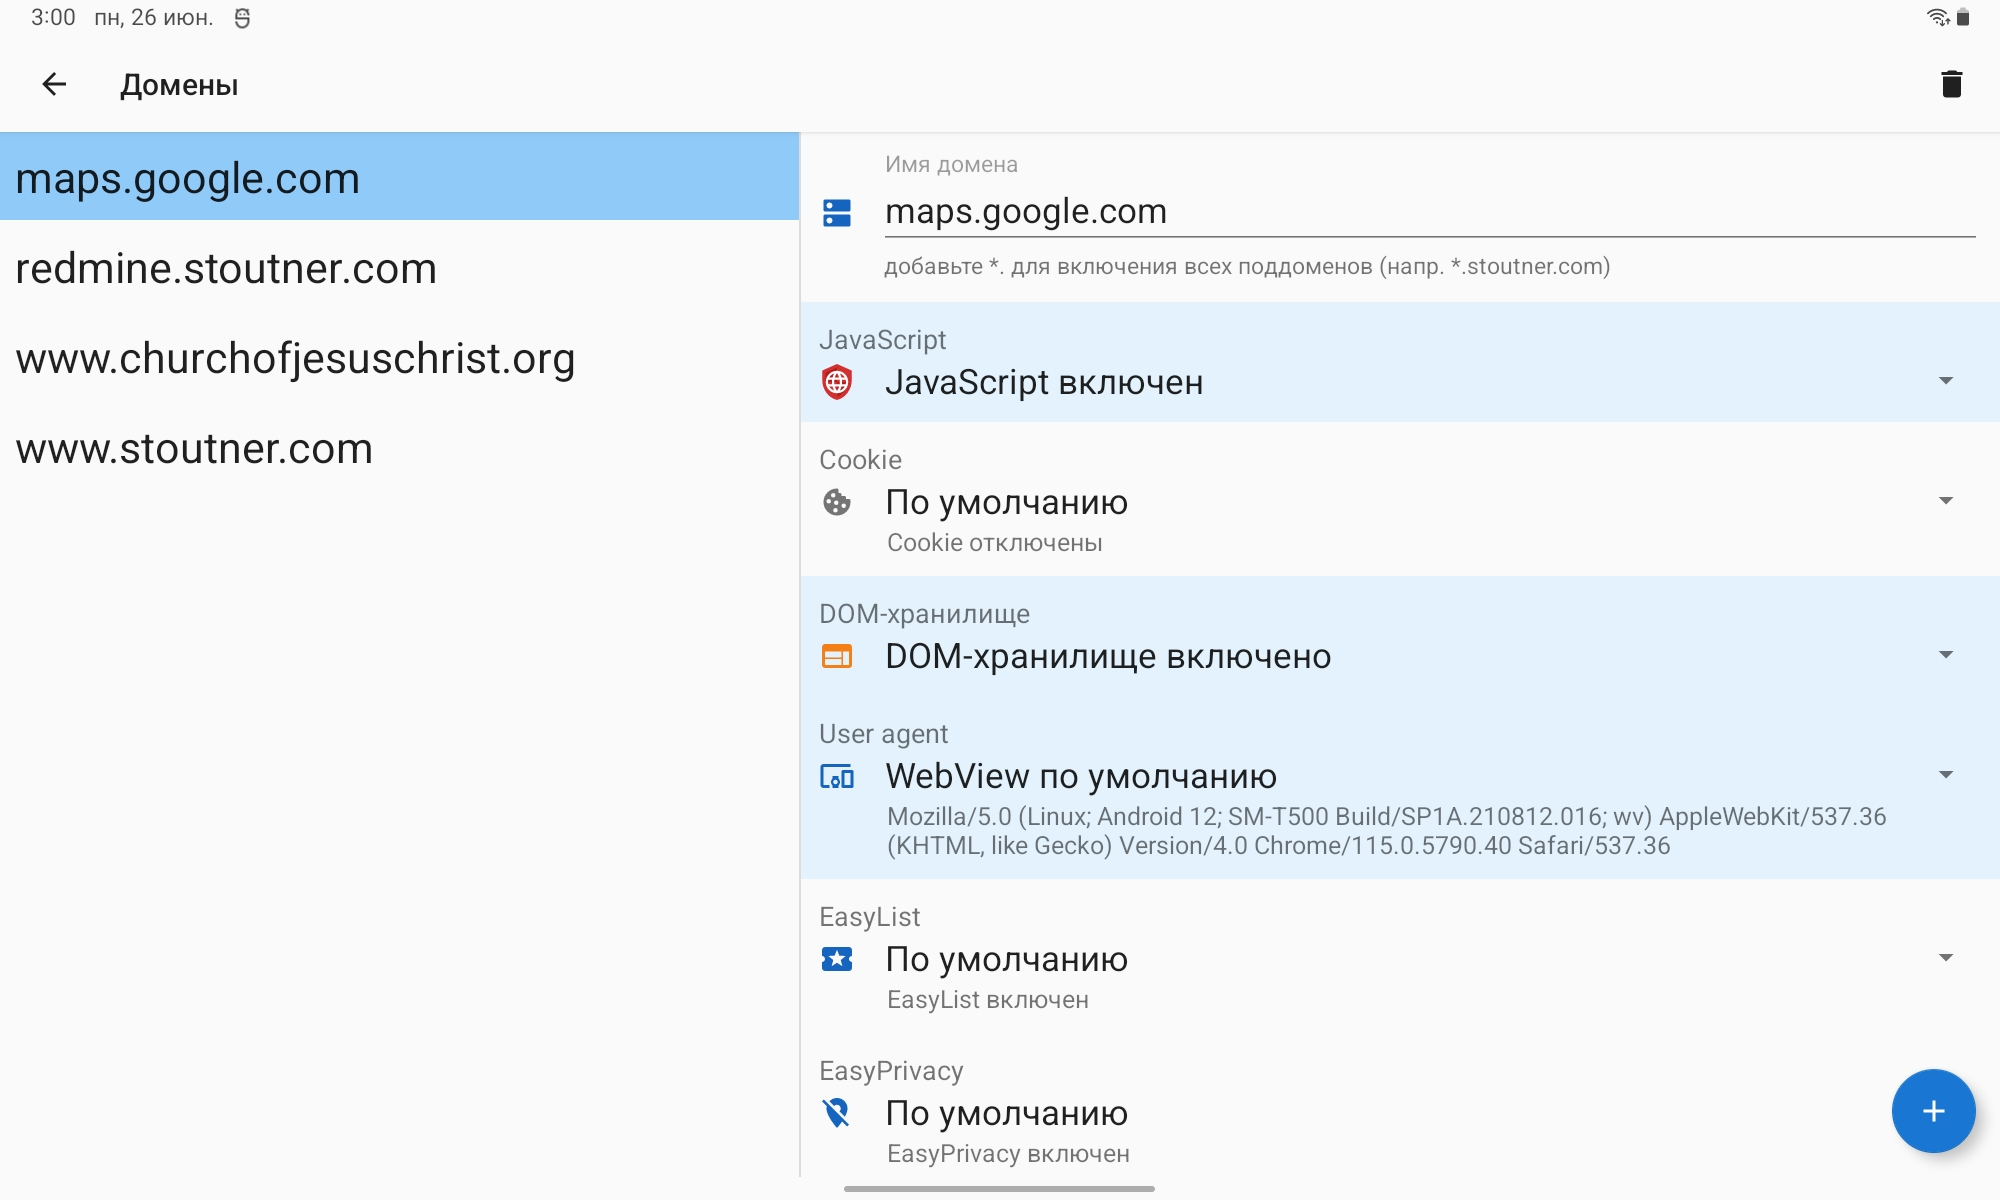 fastlane/metadata/android/ru-RU/images/phoneScreenshots/07 - 10-Inch Tablet Domains - ru.png